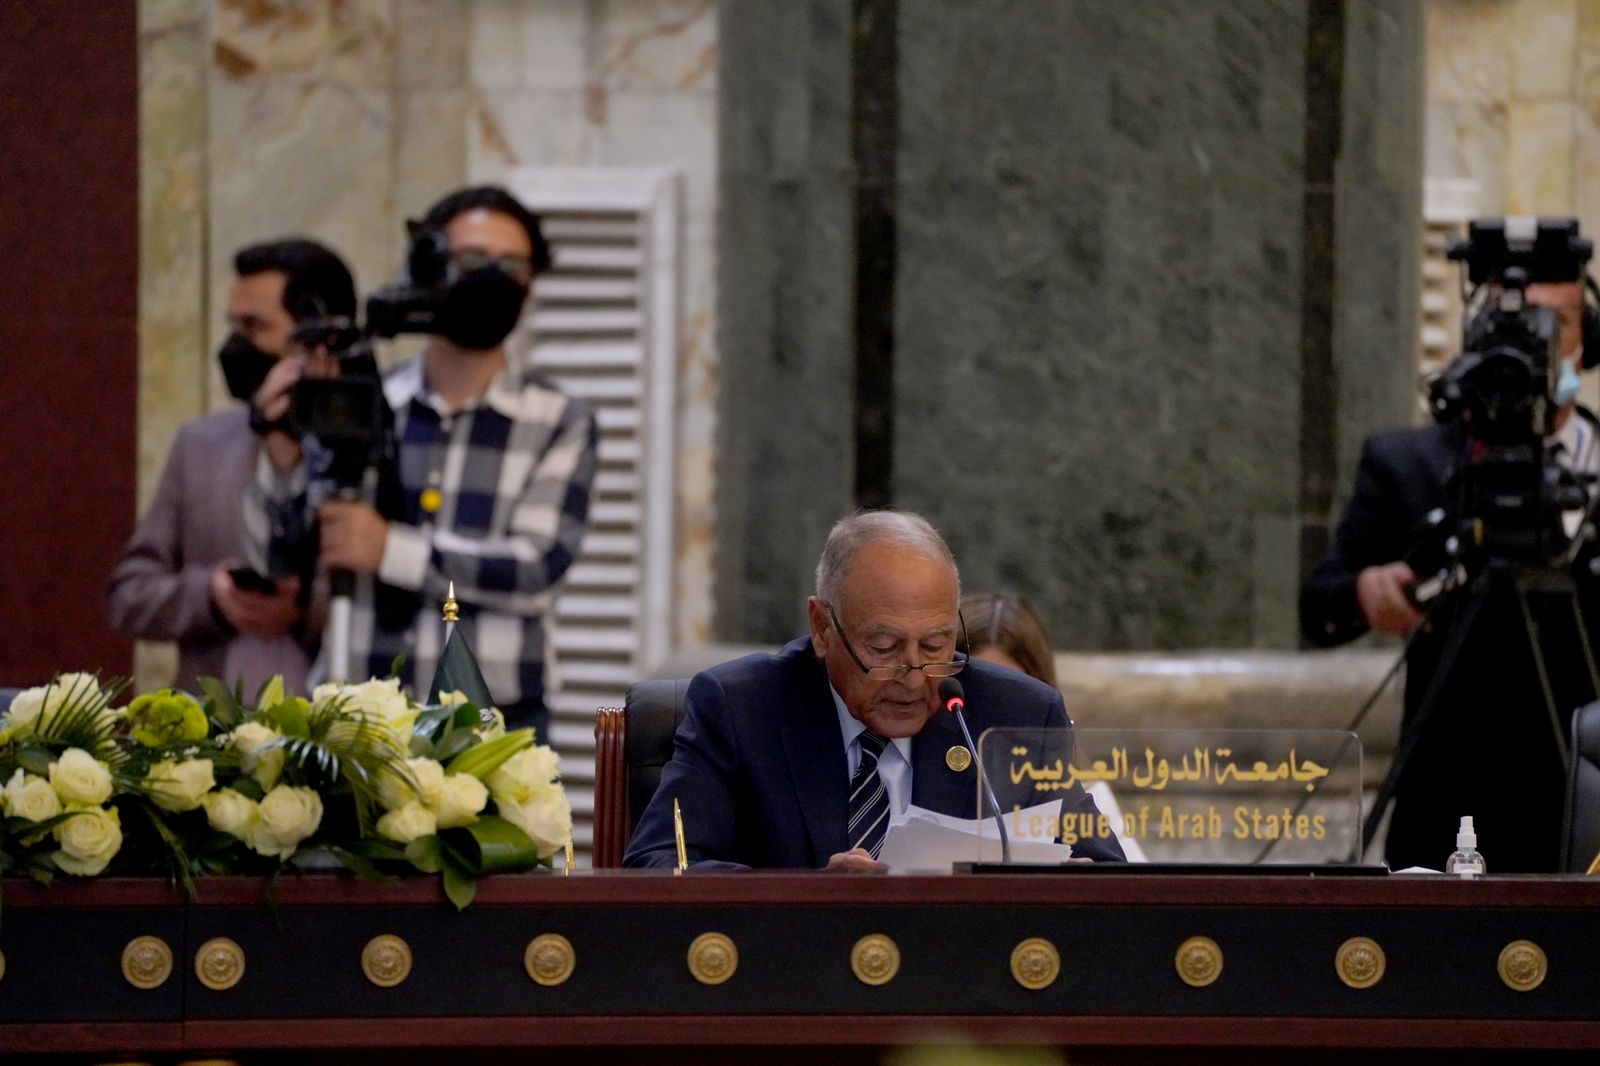 Arab League Secretary General Ahmed Aboul Gheit speaks during the Baghdad summit in Baghdad